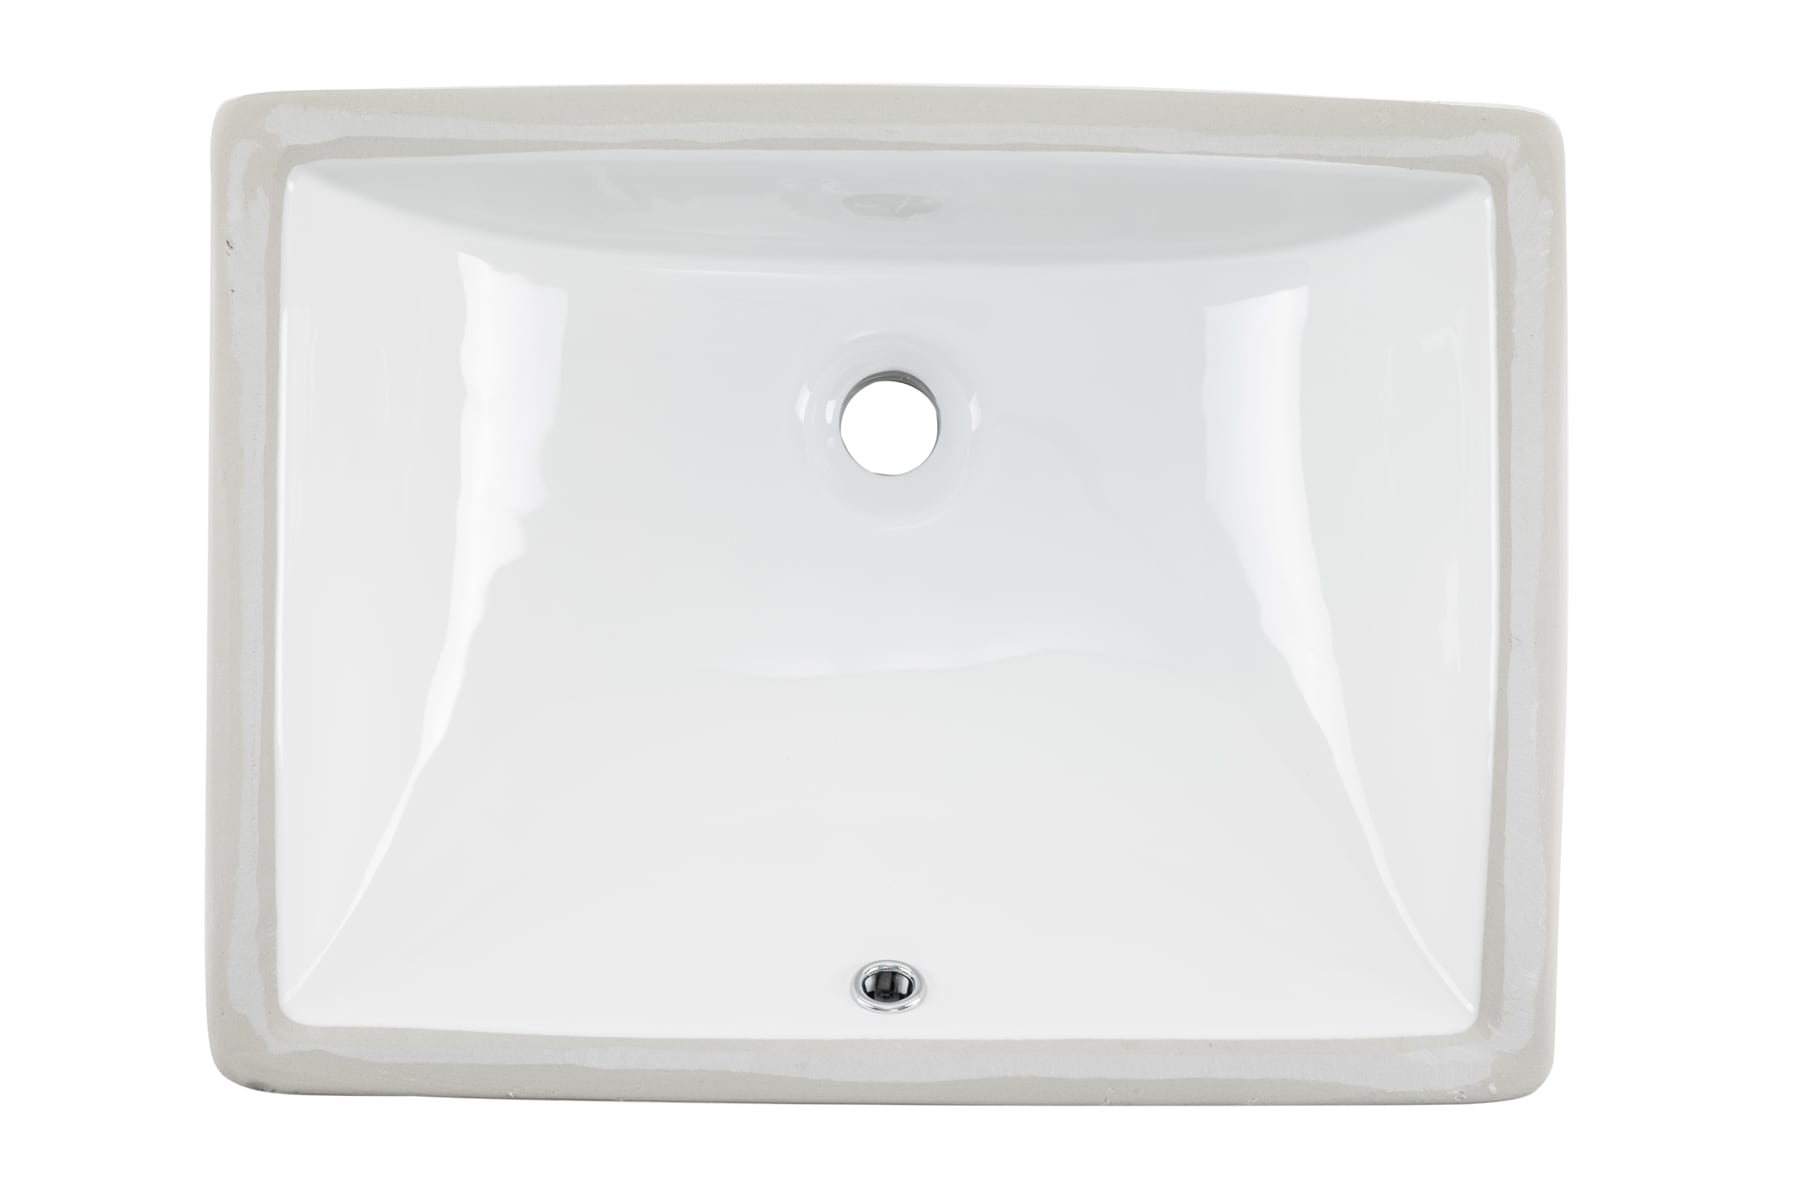 Details about   Under Mount Rectangular Ceramic Bathroom Sink with Overflow White 